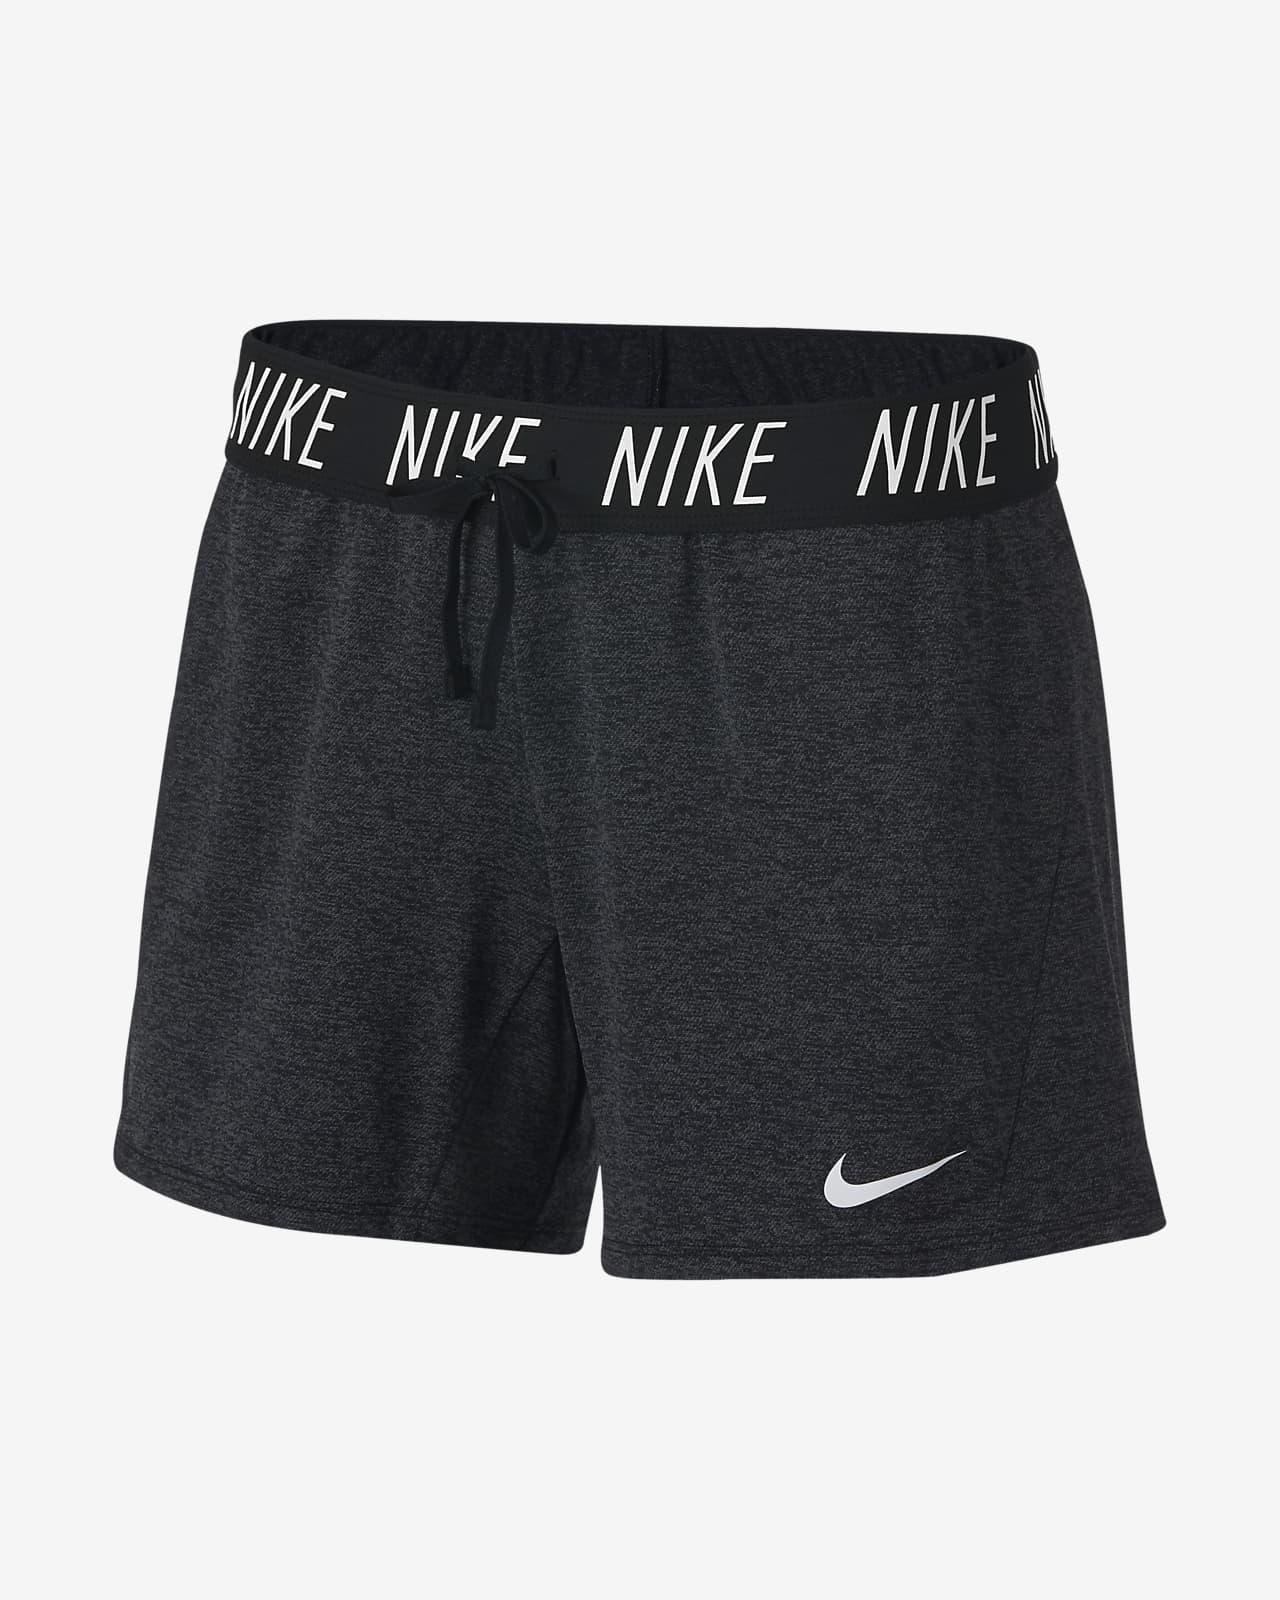 nike trainer shorts